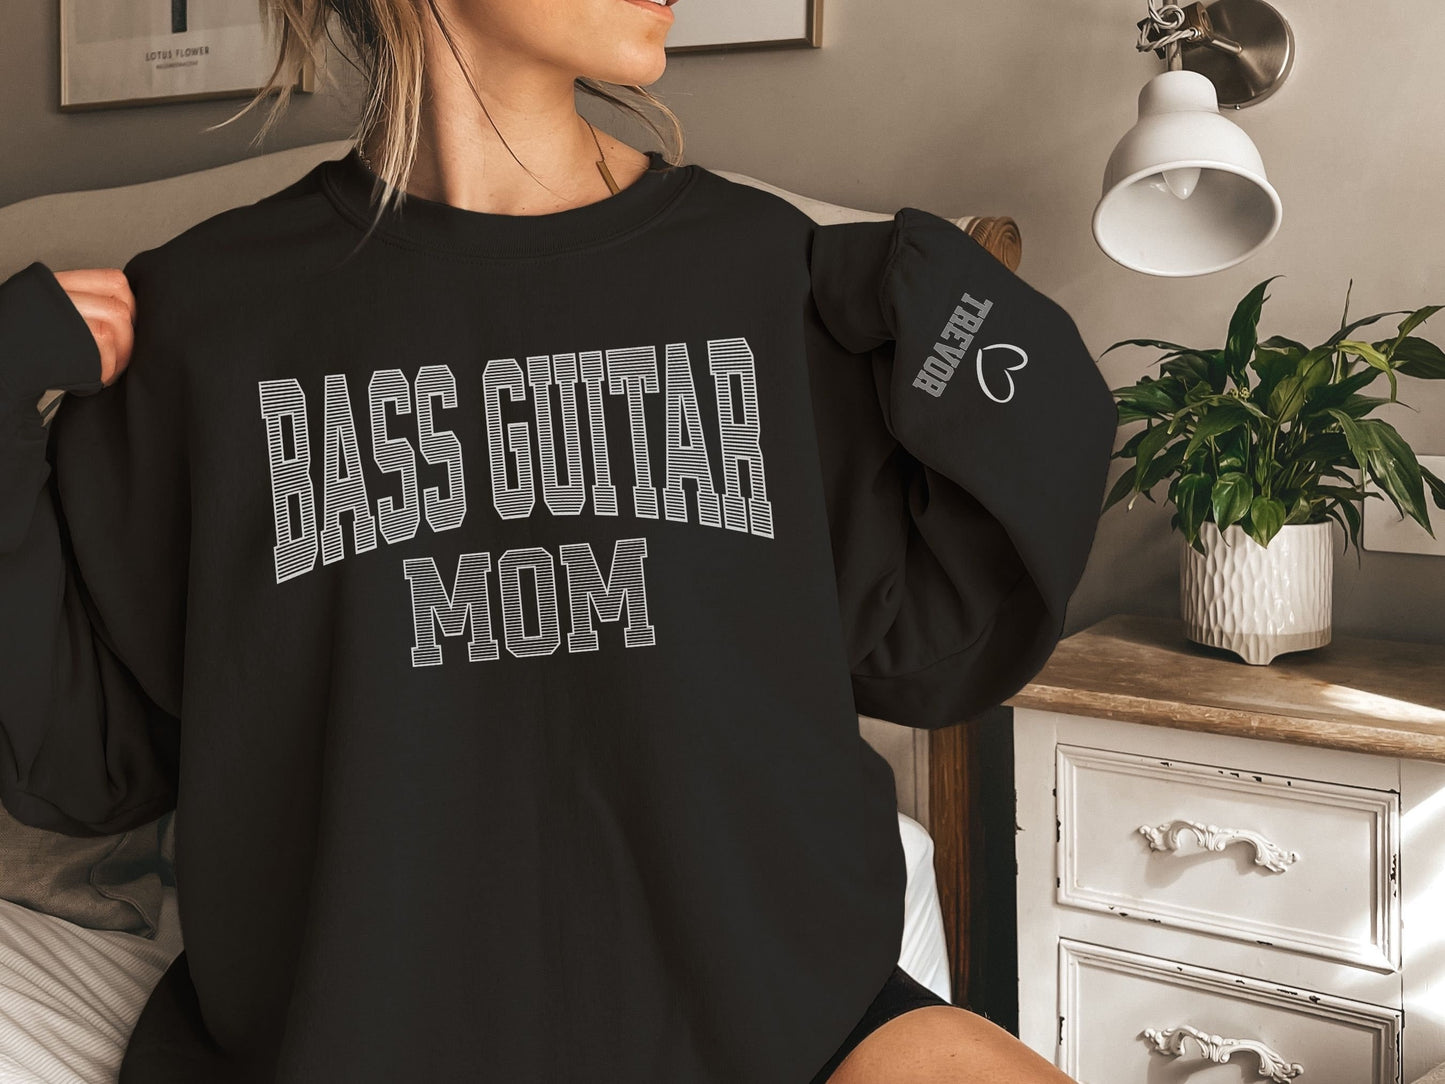 Bass Guitar Mom Sweatshirt with Custom Sleeve Design